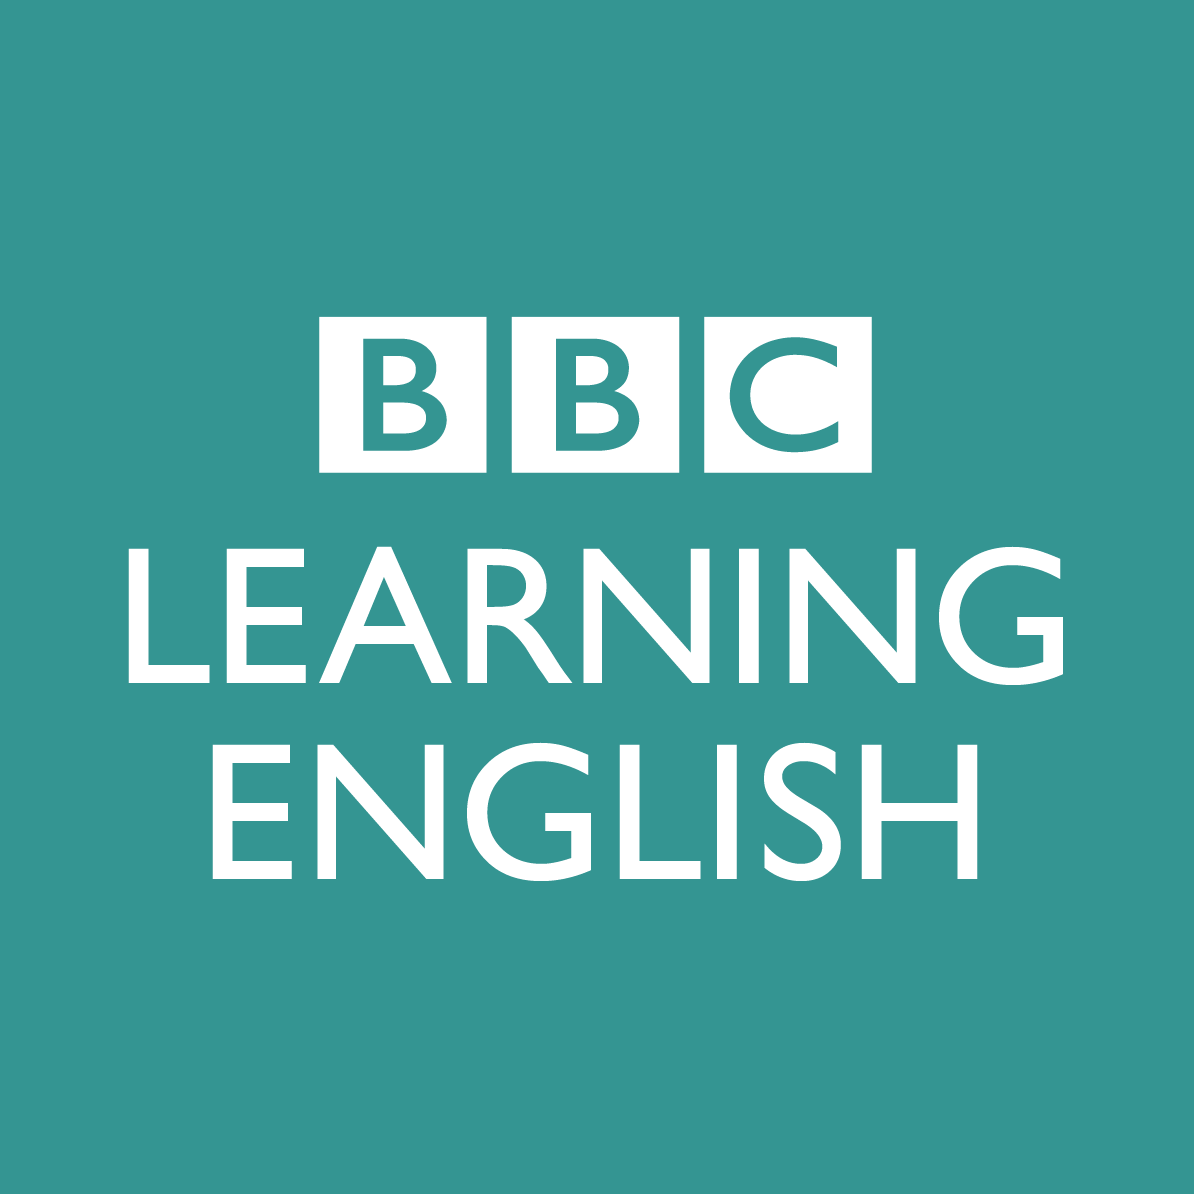 inglés gratis bbc